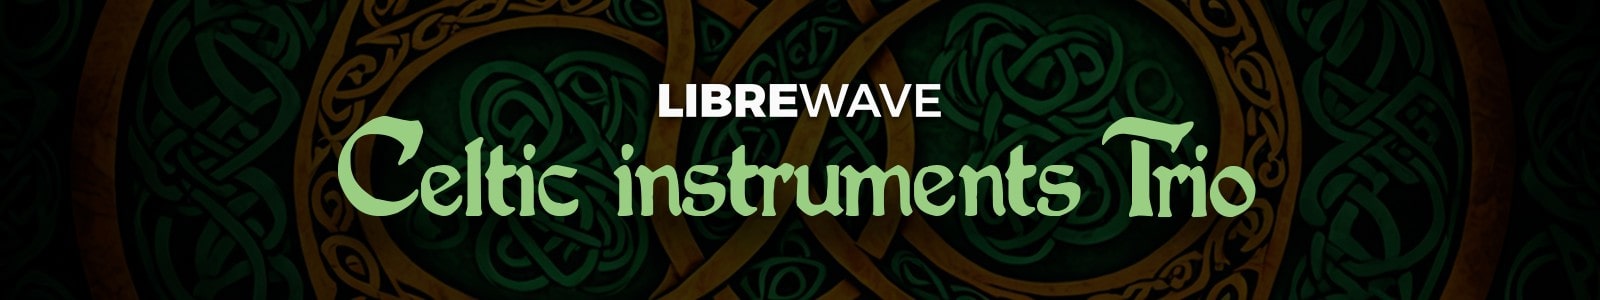 LIBREWAVE Celtic Instruments Trio